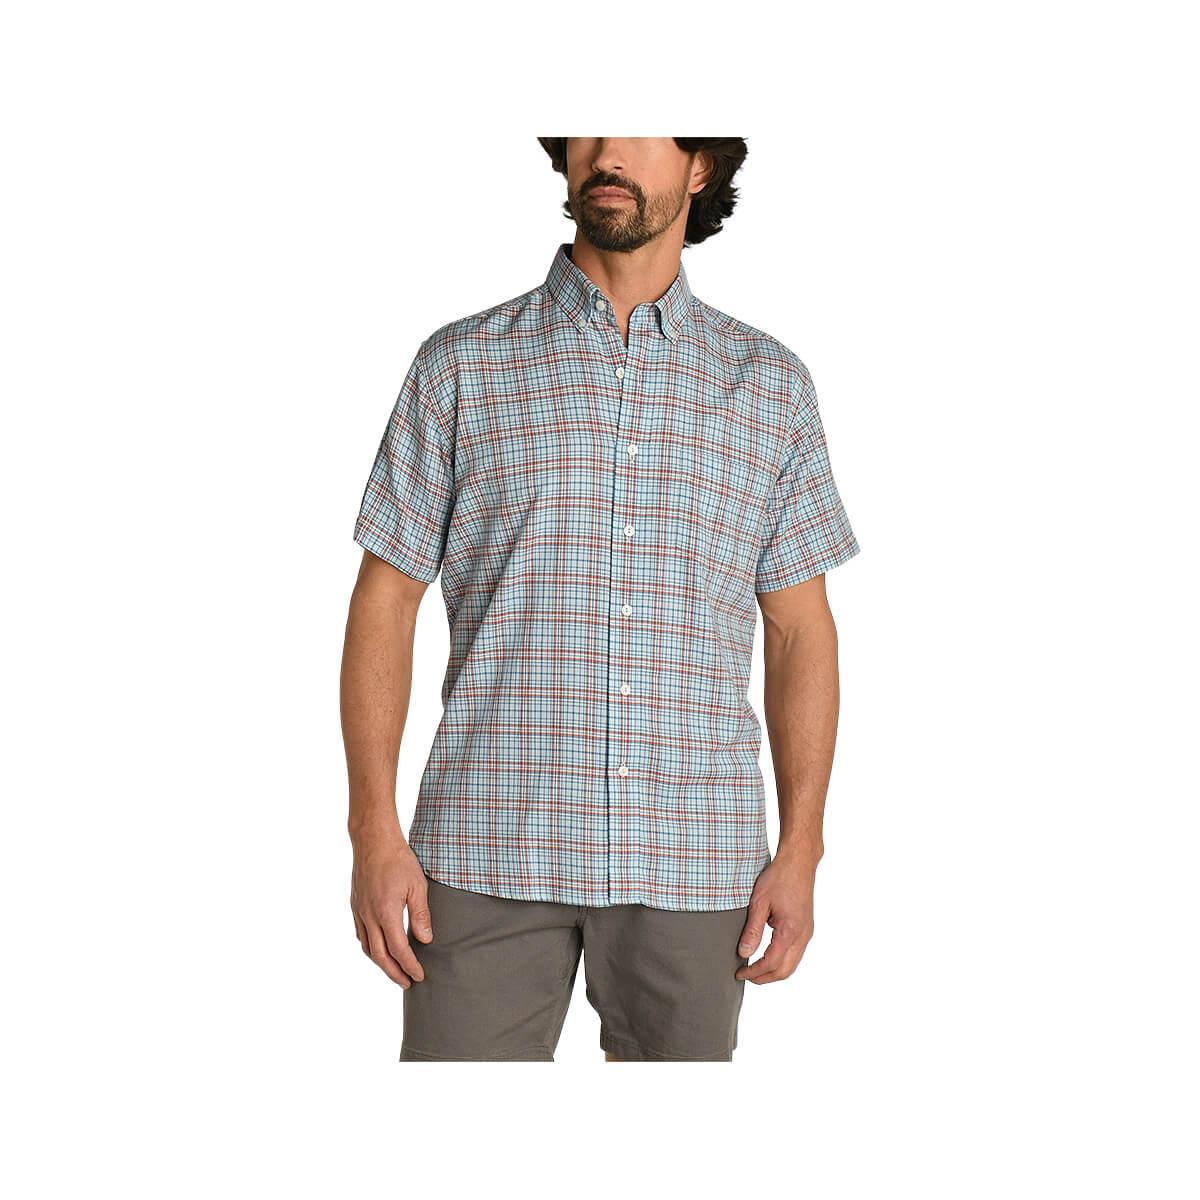  Men's Bristol Plaid Short Sleeve Shirt